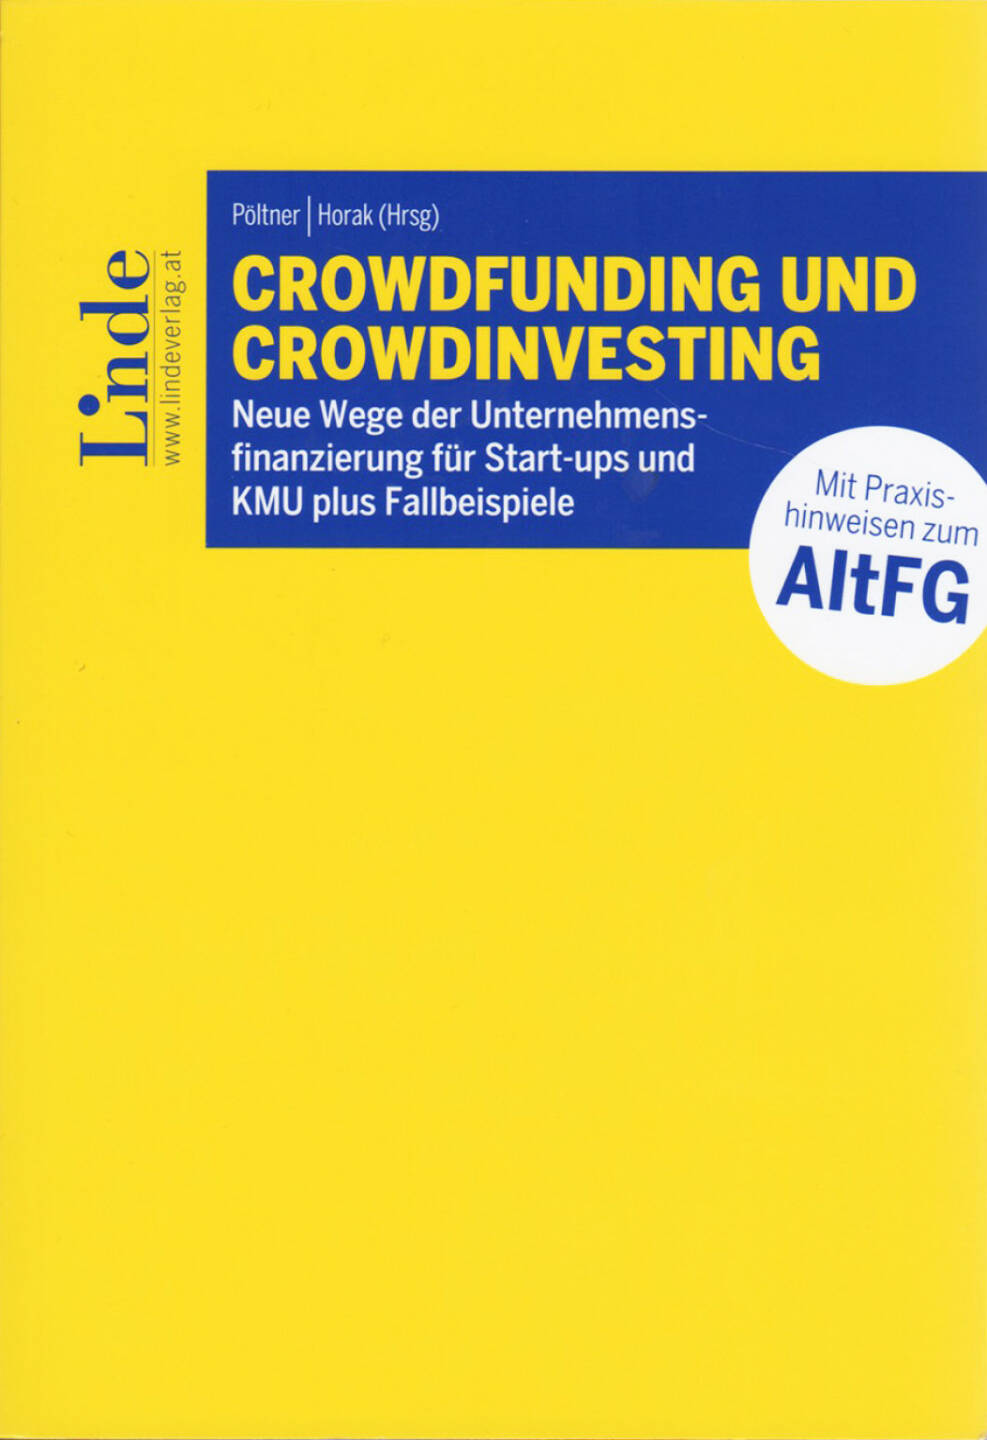 Paul Pöltner / Daniel Horak - Crowdfunding und Crowdinvesting - http://boerse-social.com/financebooks/show/paul_poltner_daniel_horak_-_crowdfunding_und_crowdinvesting